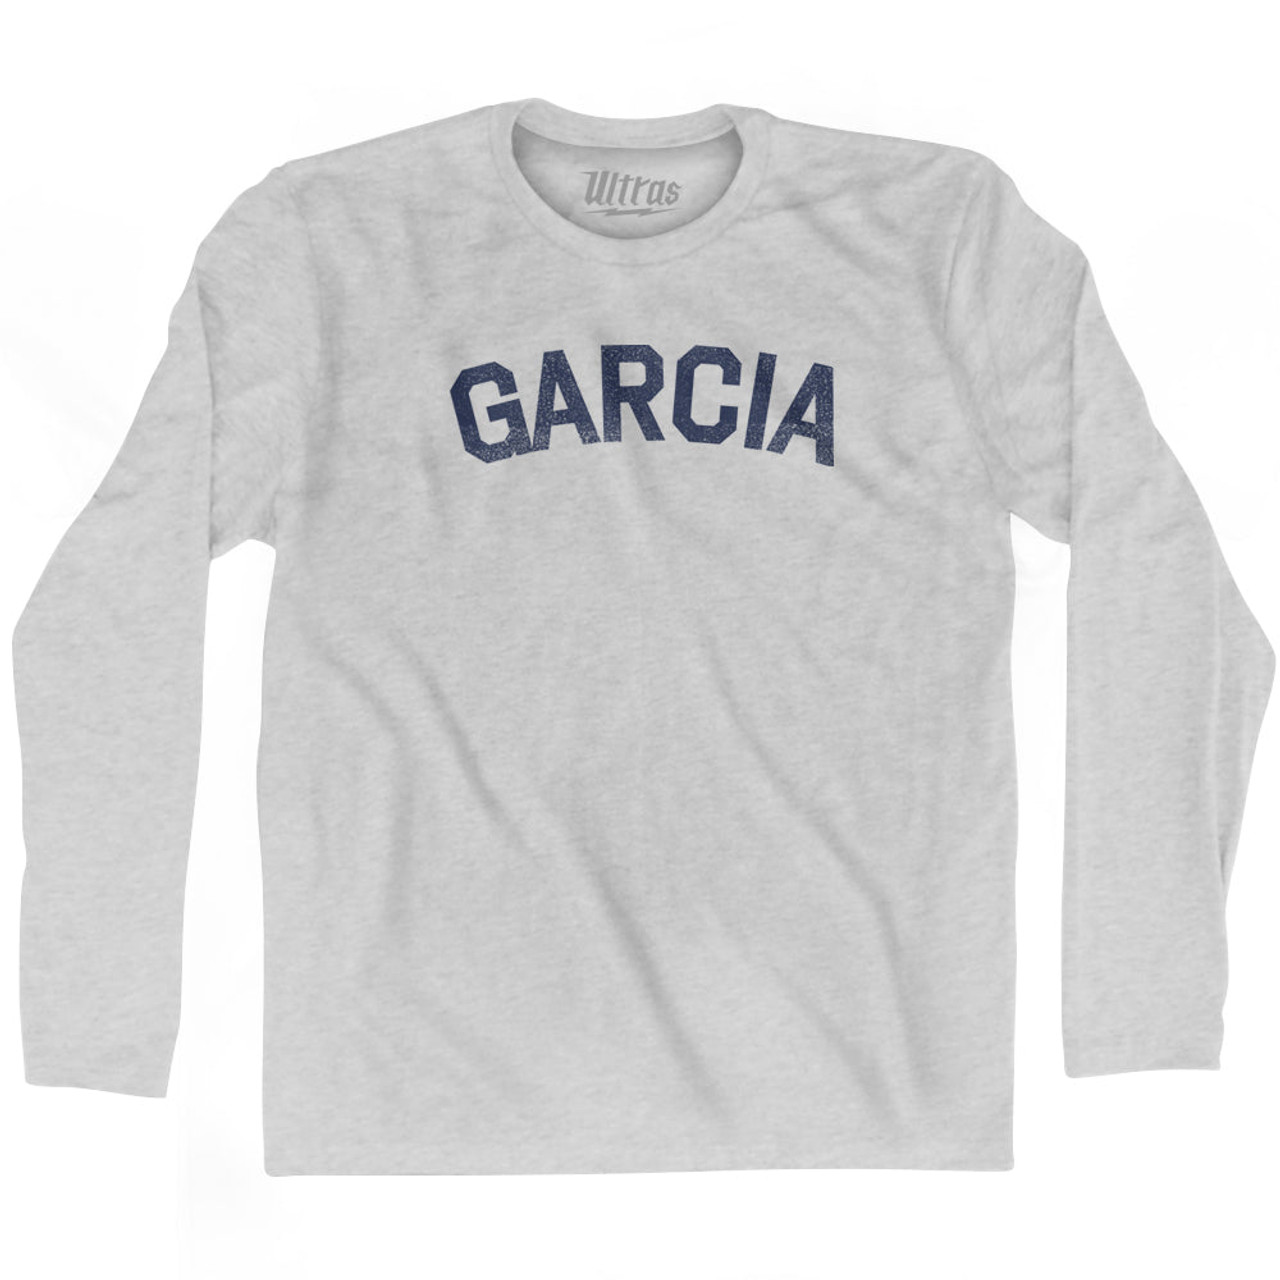 GARCIA Adult Heather - Long Sleeve Grey Cotton T-shirt